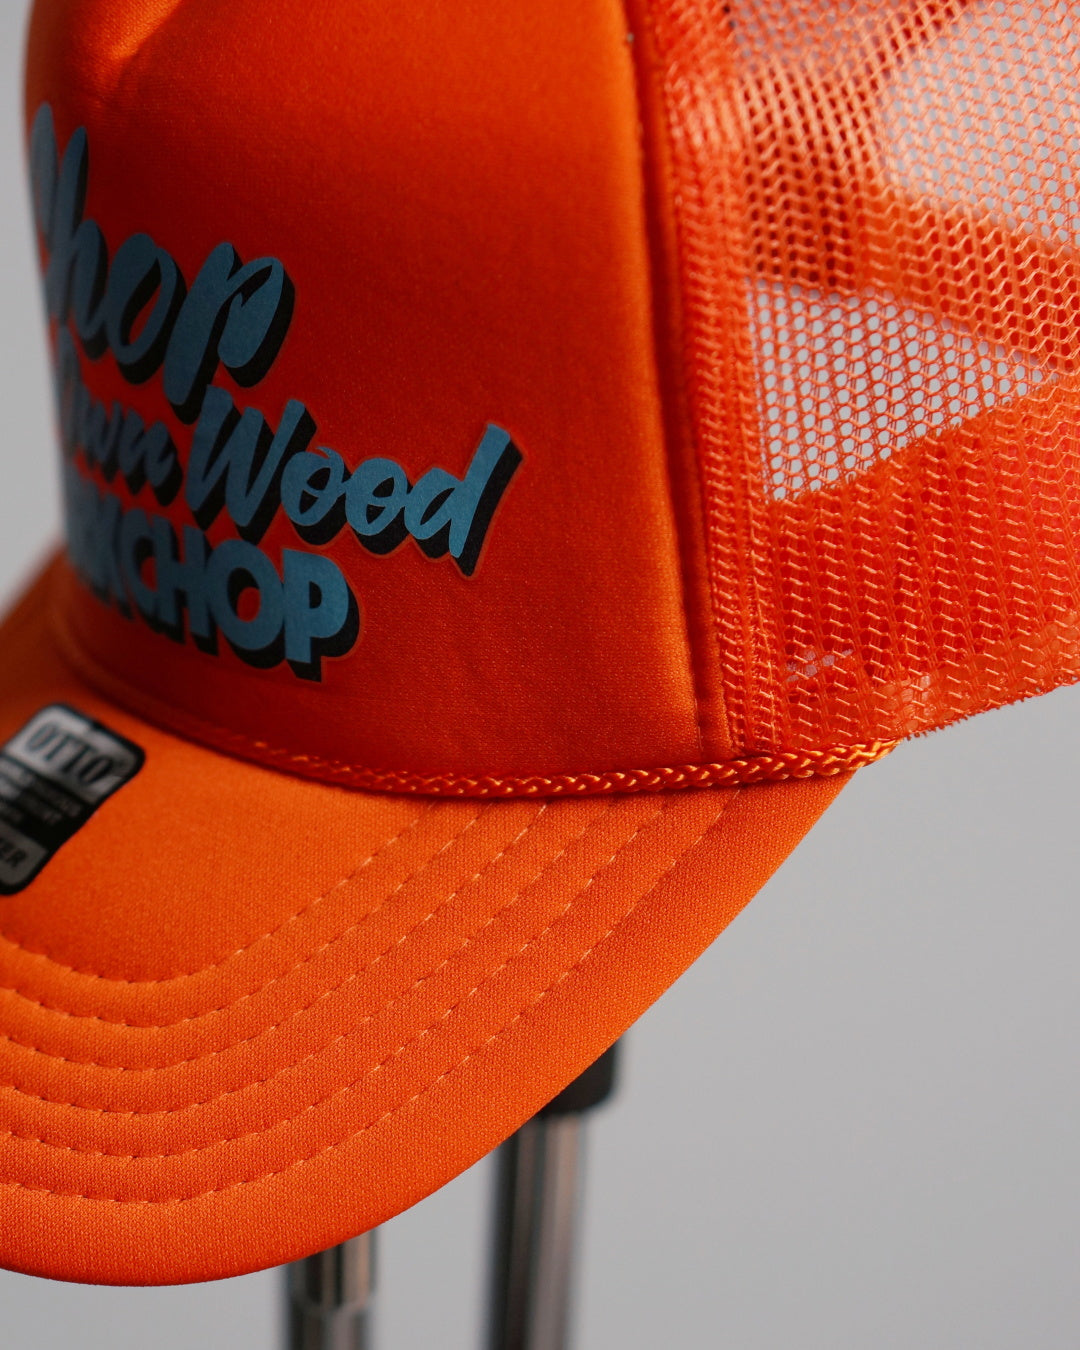 PORKCHOP | CHOP YOUR OWN WOOD CAP - Orange